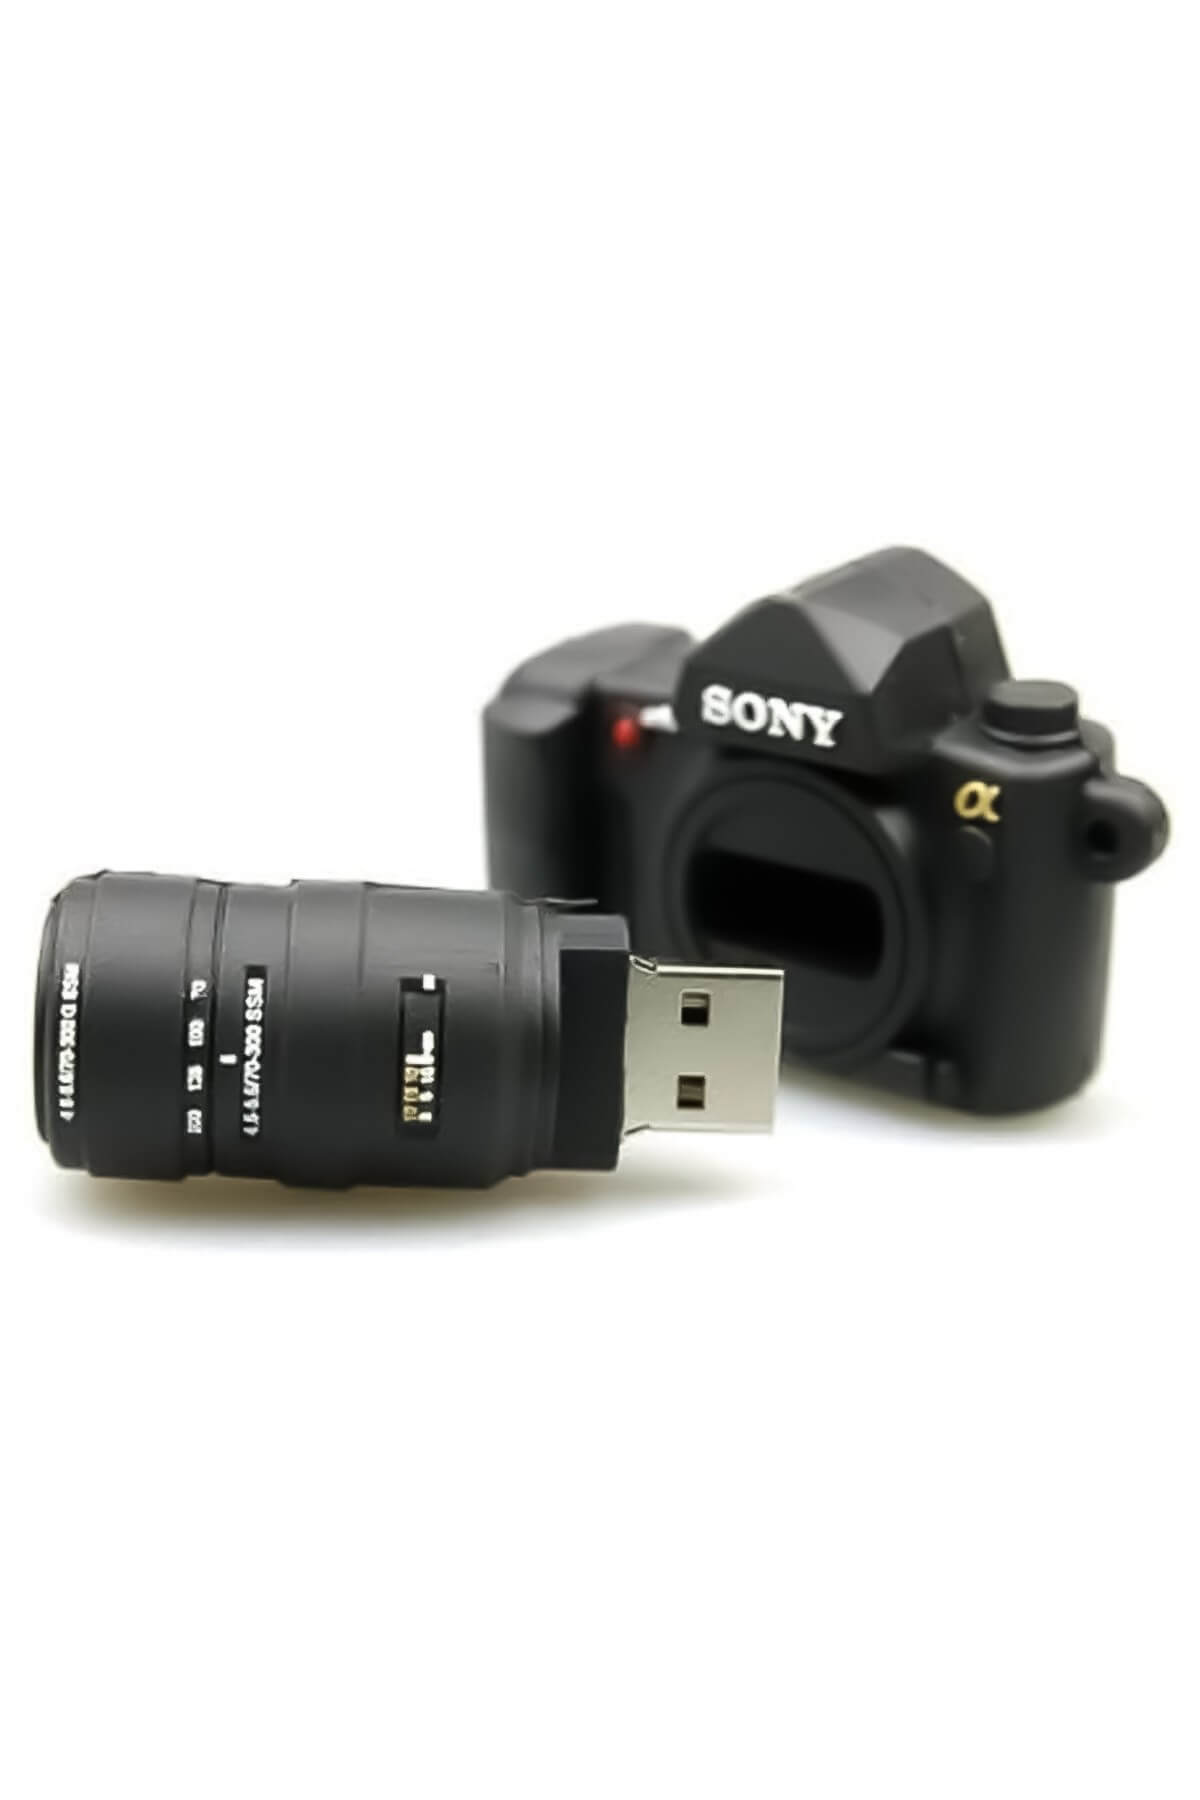 Sony Kamera Flash Bellek 32GB